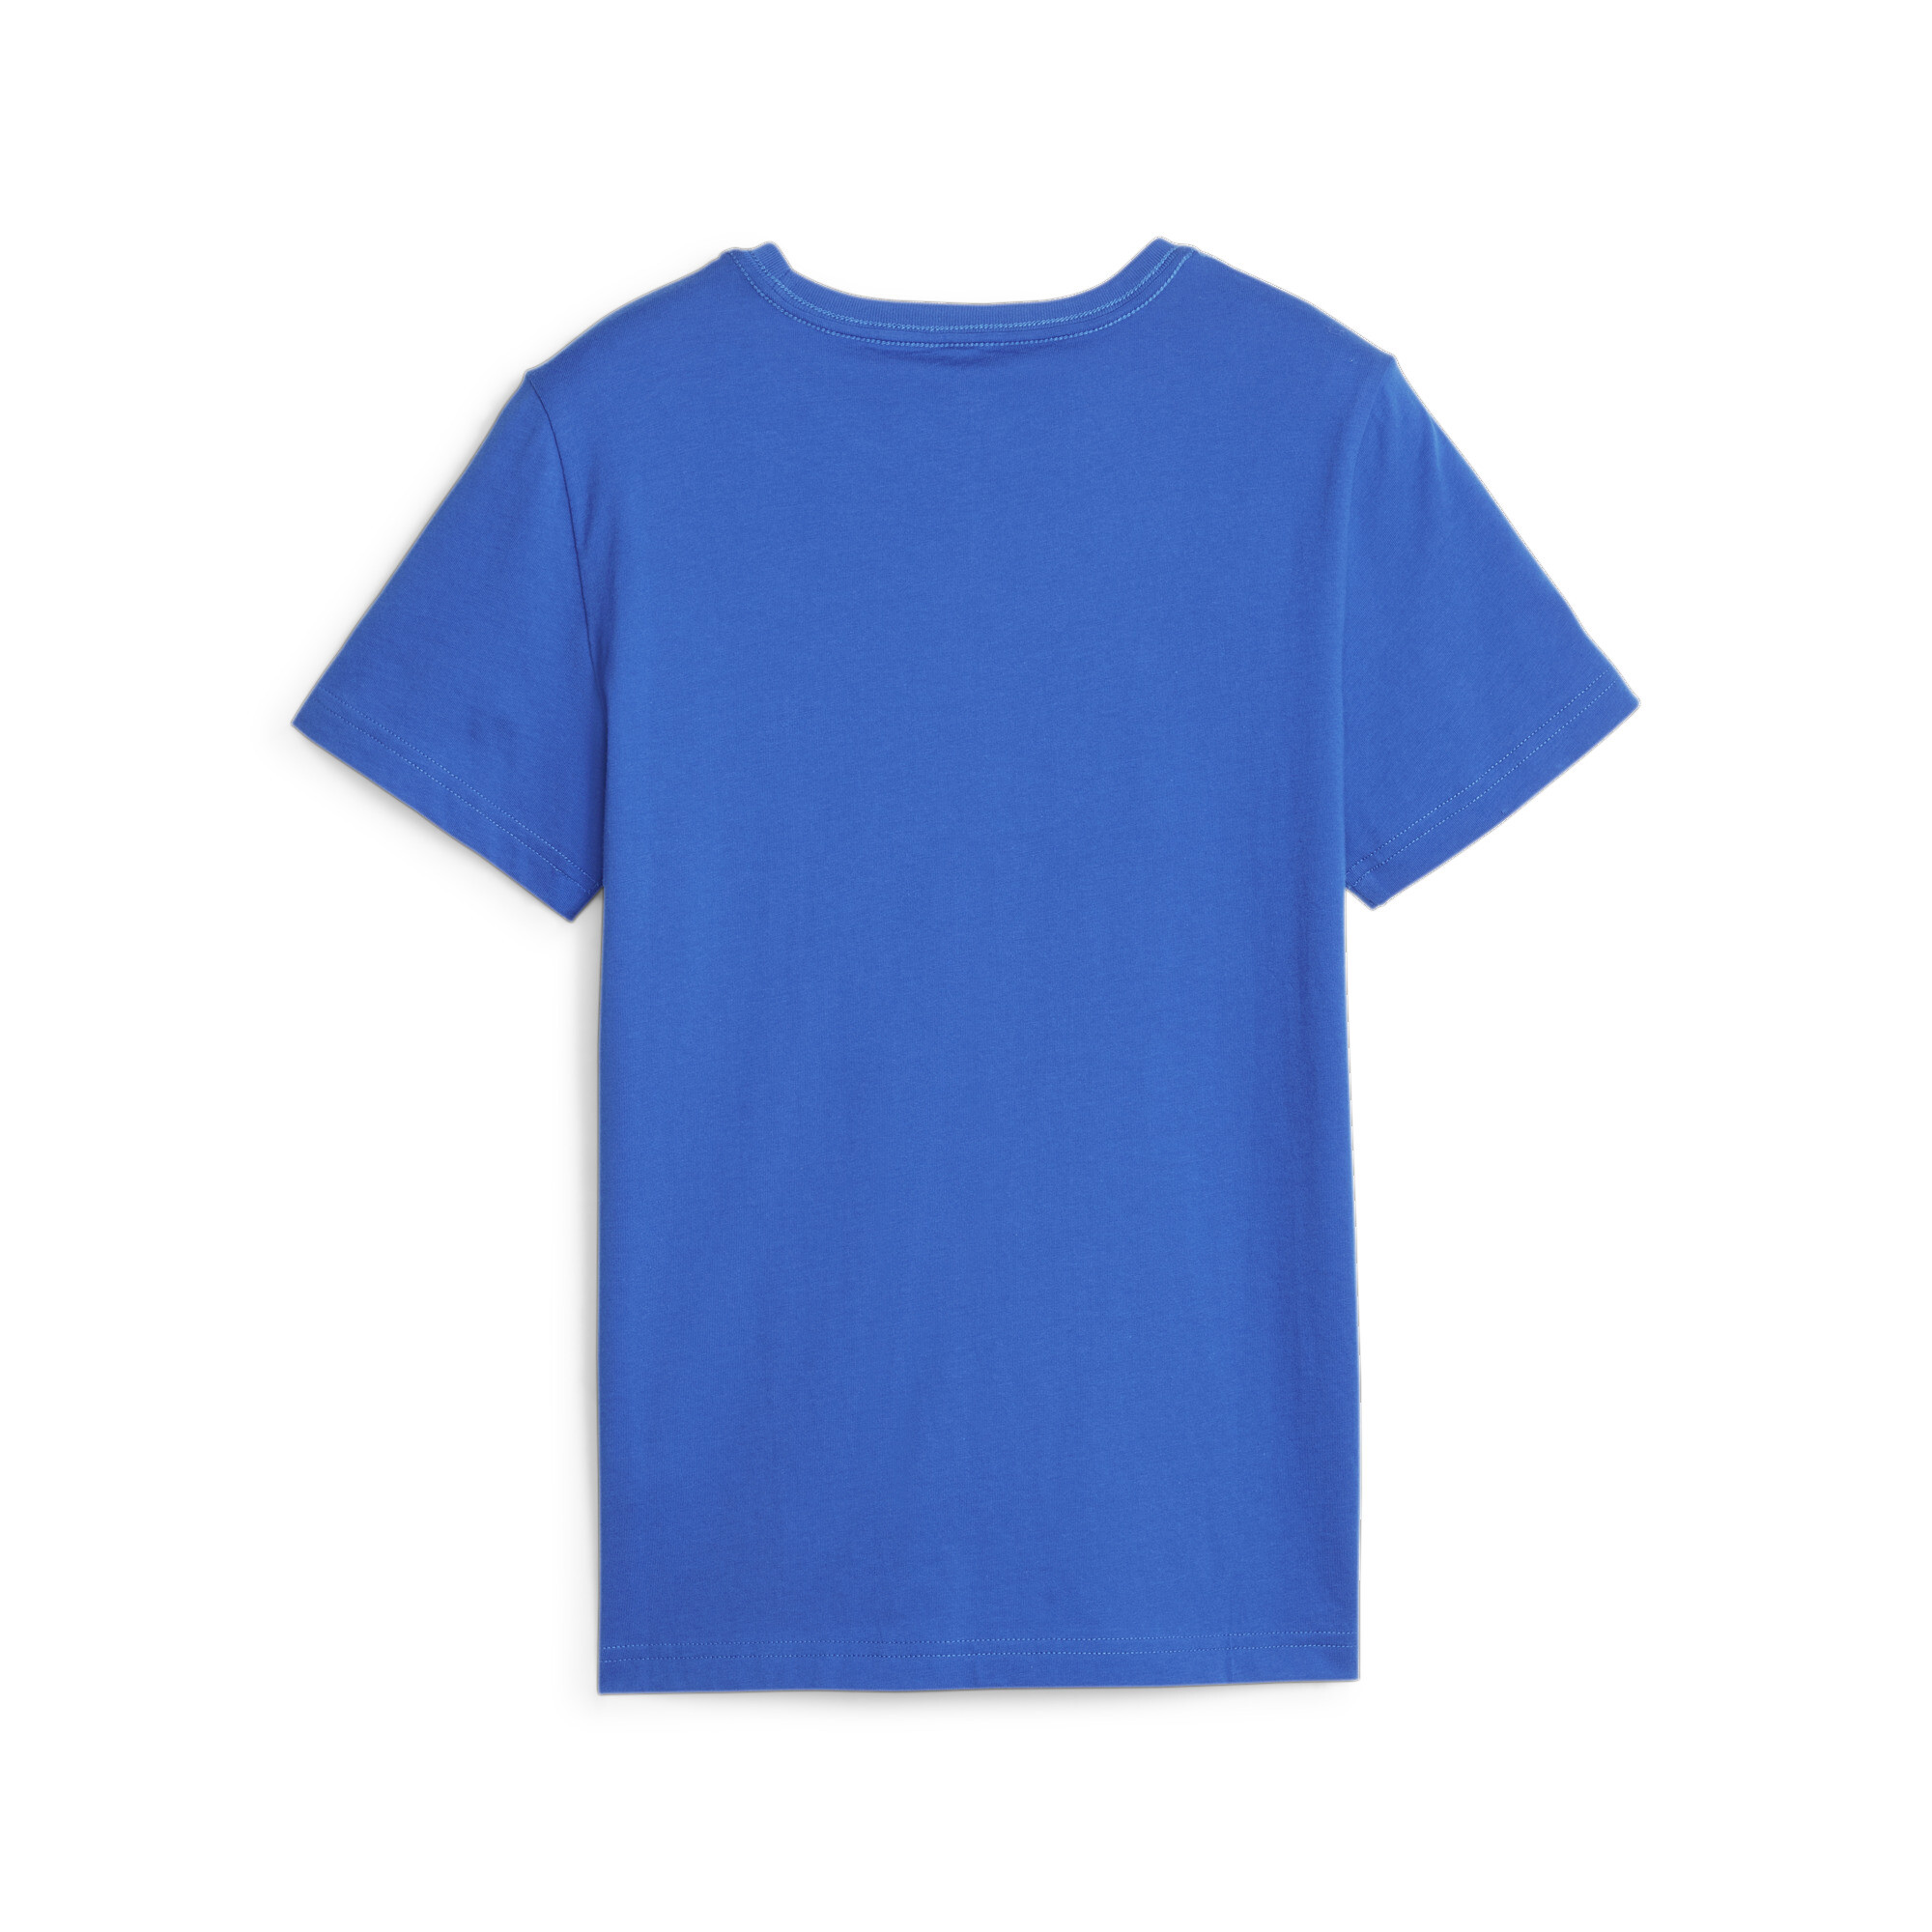 Men's Puma Essentials+ Two-Tone Logo Youth T-Shirt, Blue, Size 11-12Y, Clothing